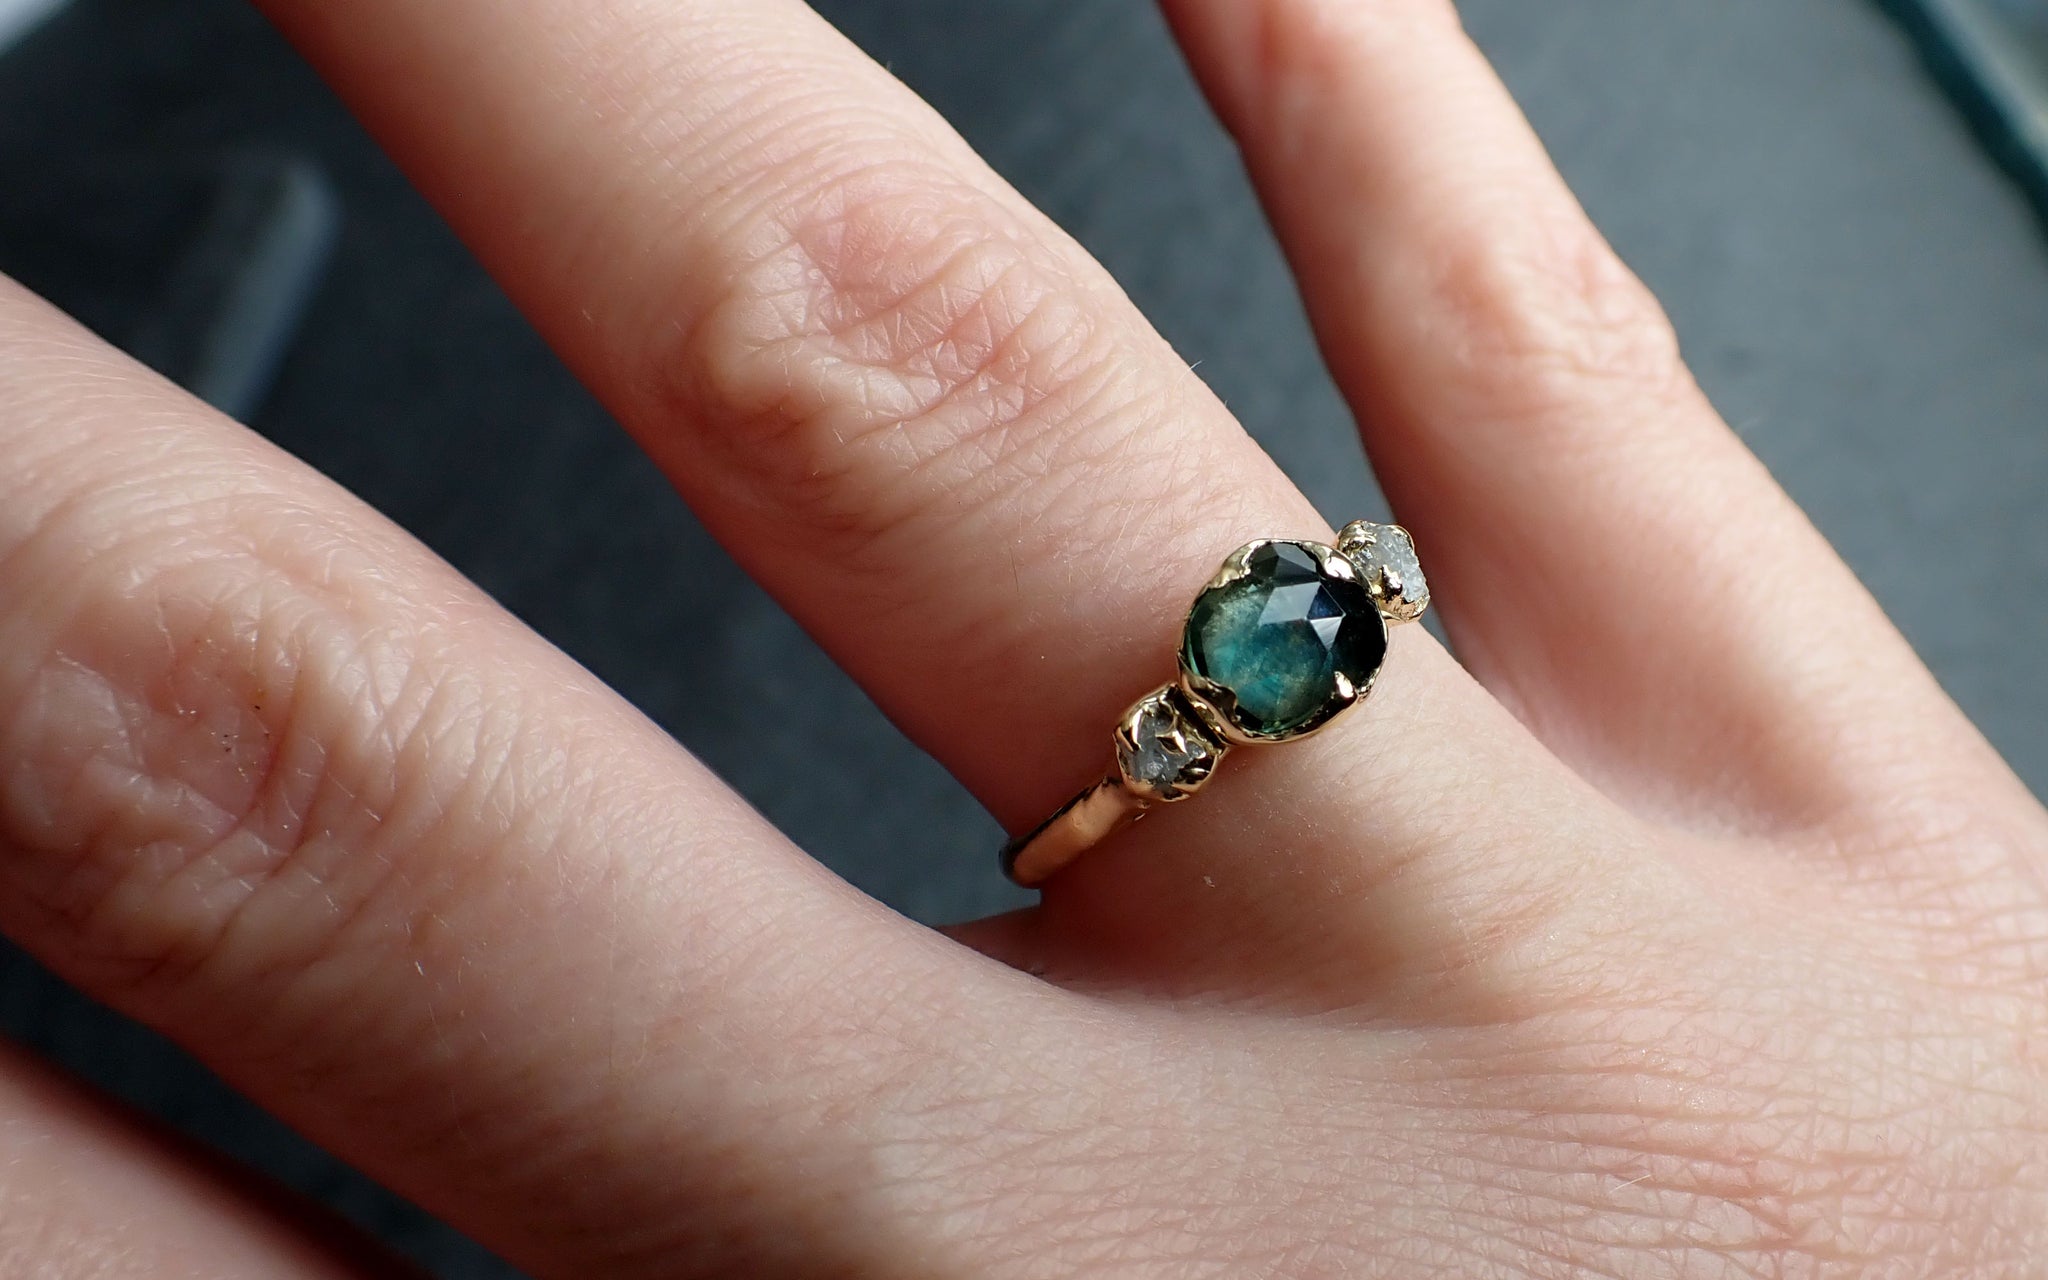 Fancy cut Montana blue Sapphire rough Diamond 18k yellow Gold Engagement Ring Wedding Ring Gemstone Ring Multi stone Ring 2642